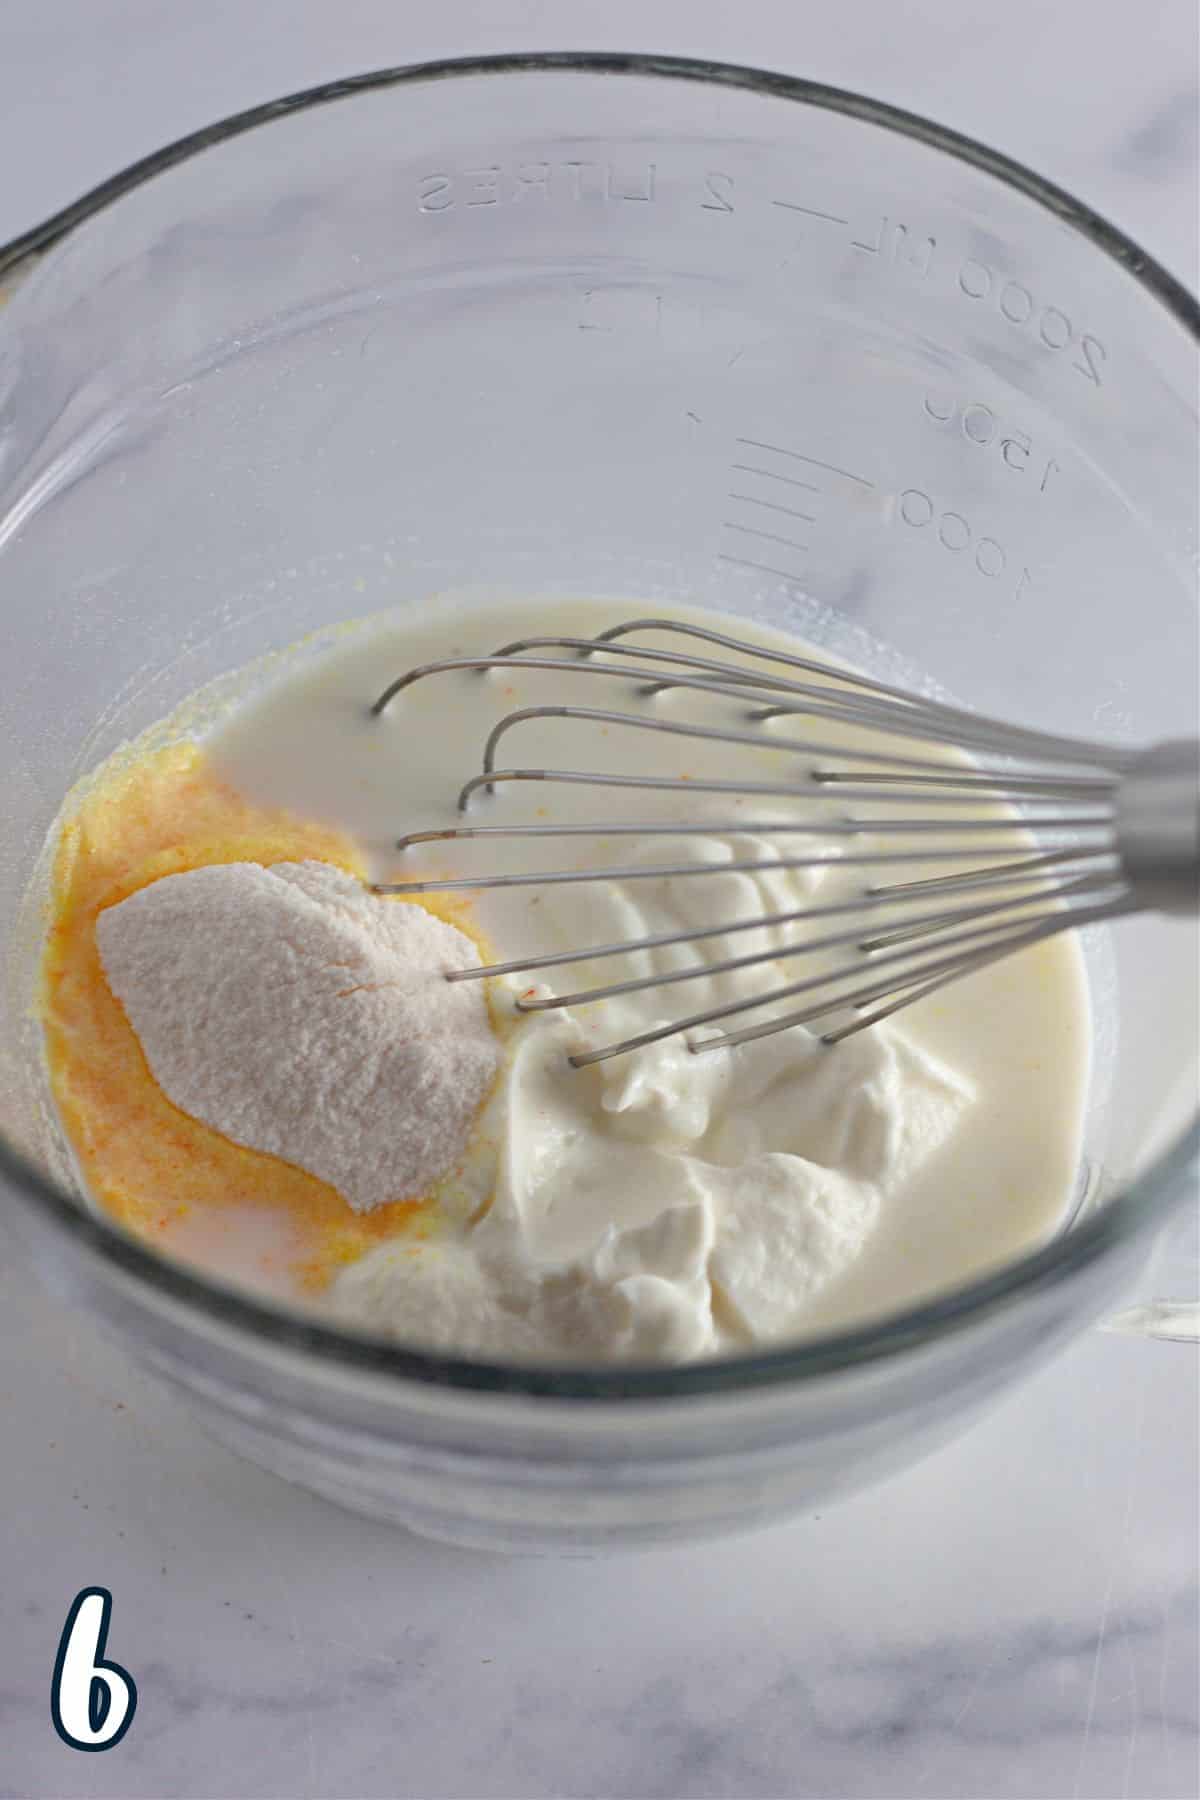 Vanilla pudding mix, milk, and Greek yogurt in a glass mixing bowl. 